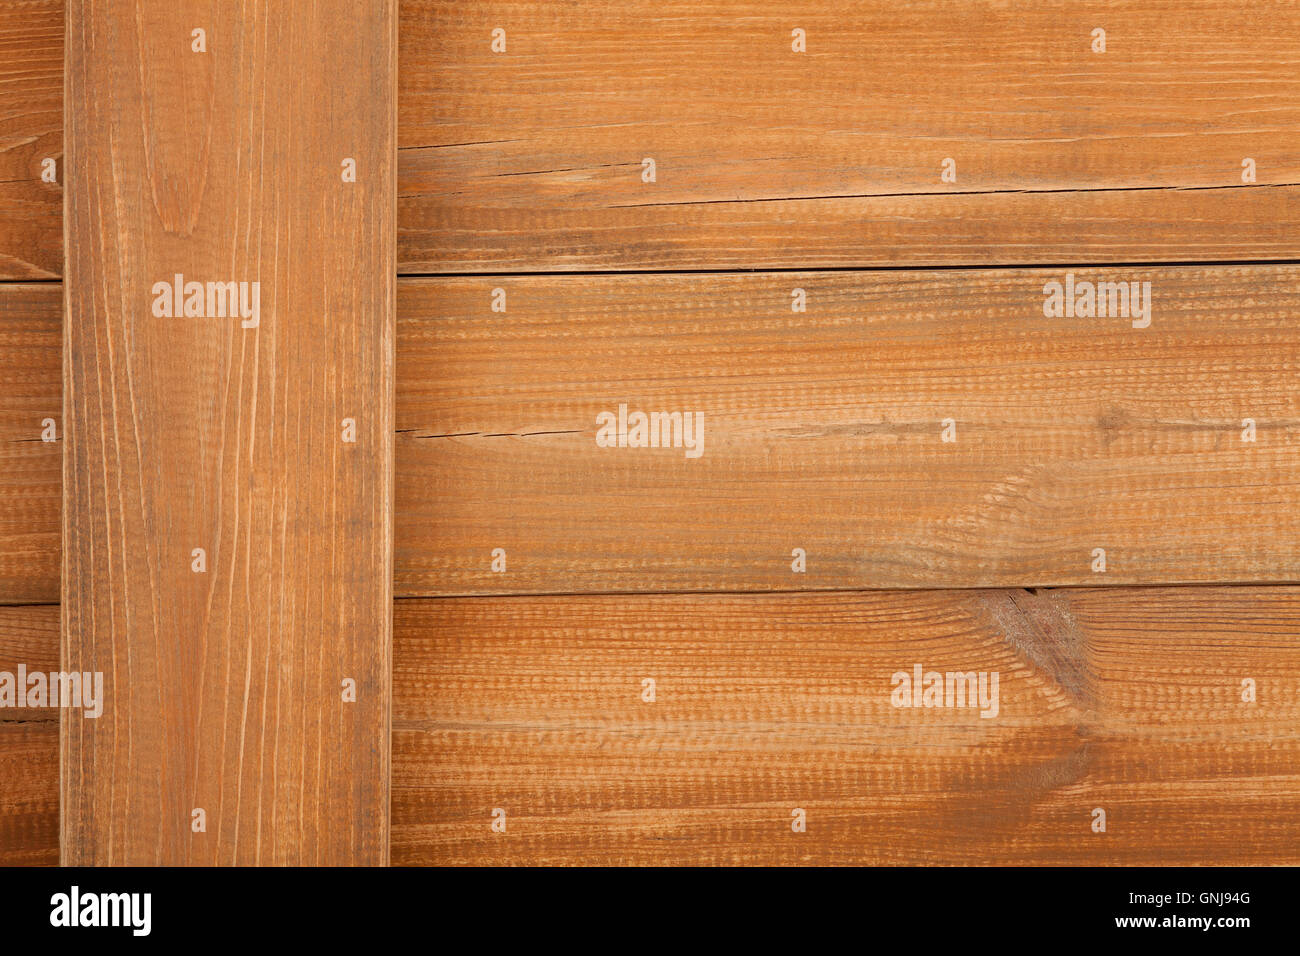 brown wooden background or wooden texture desktop Stock Photo